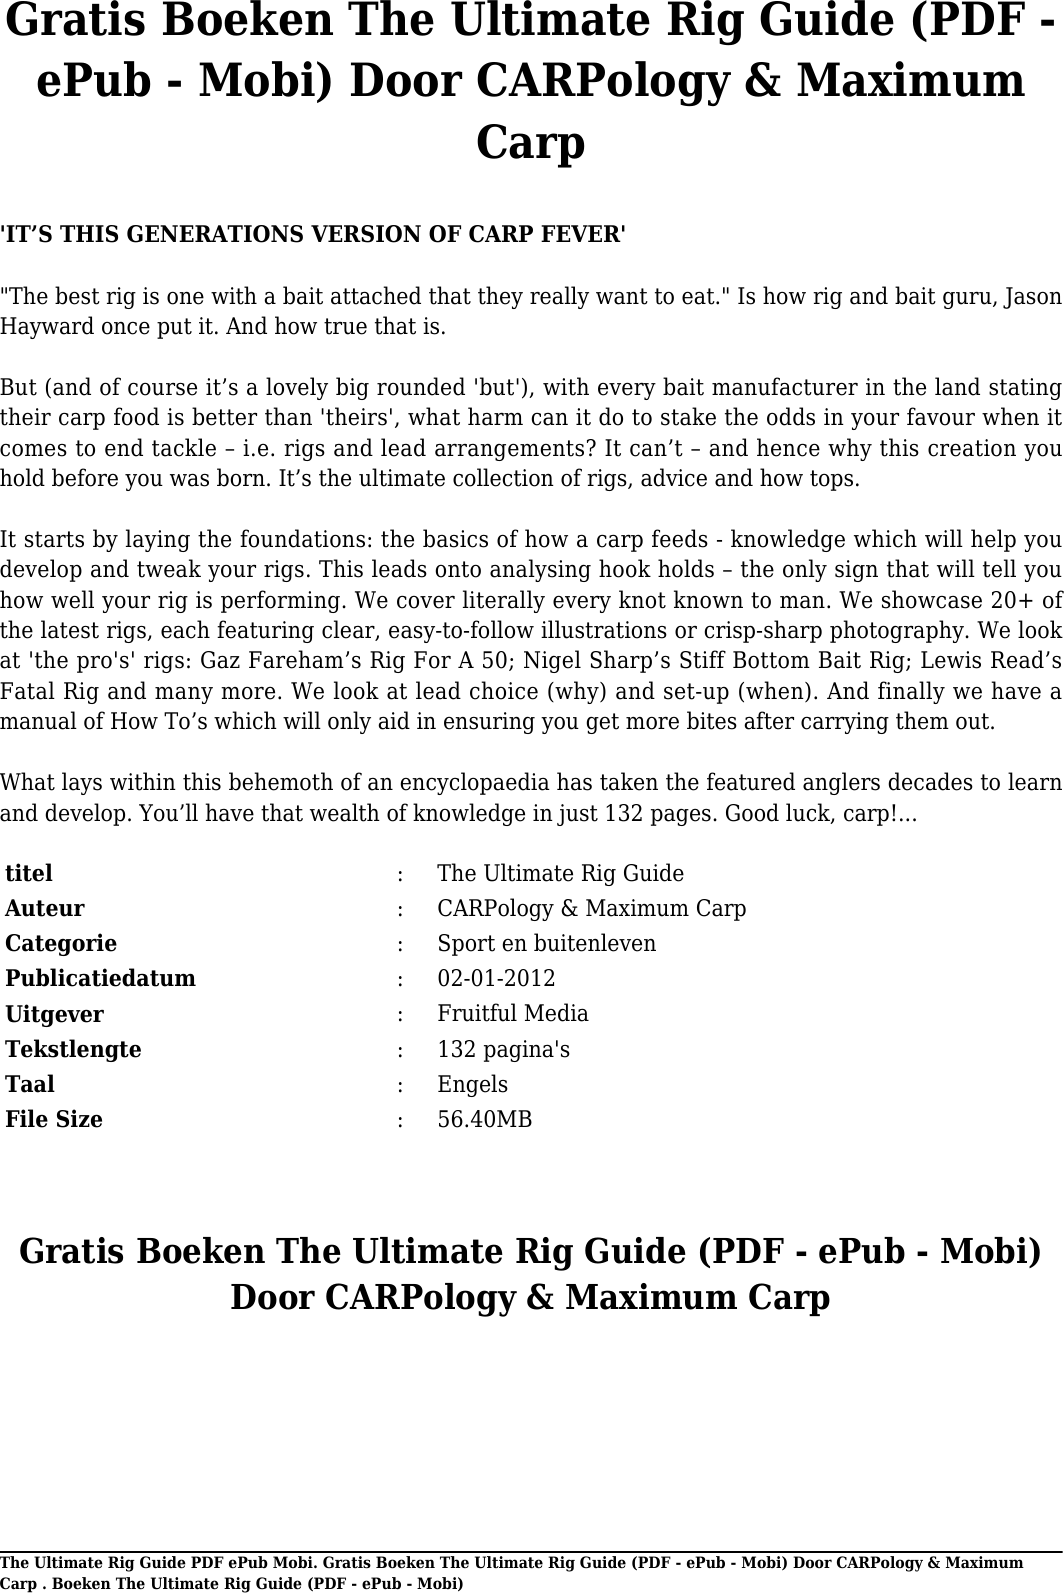 Page 2 of 11 - Gratis Boeken The Ultimate Rig Guide Van CARPology & Maximum Carp(PDF - EPub Mobi) (PDF E Pub Door Carp